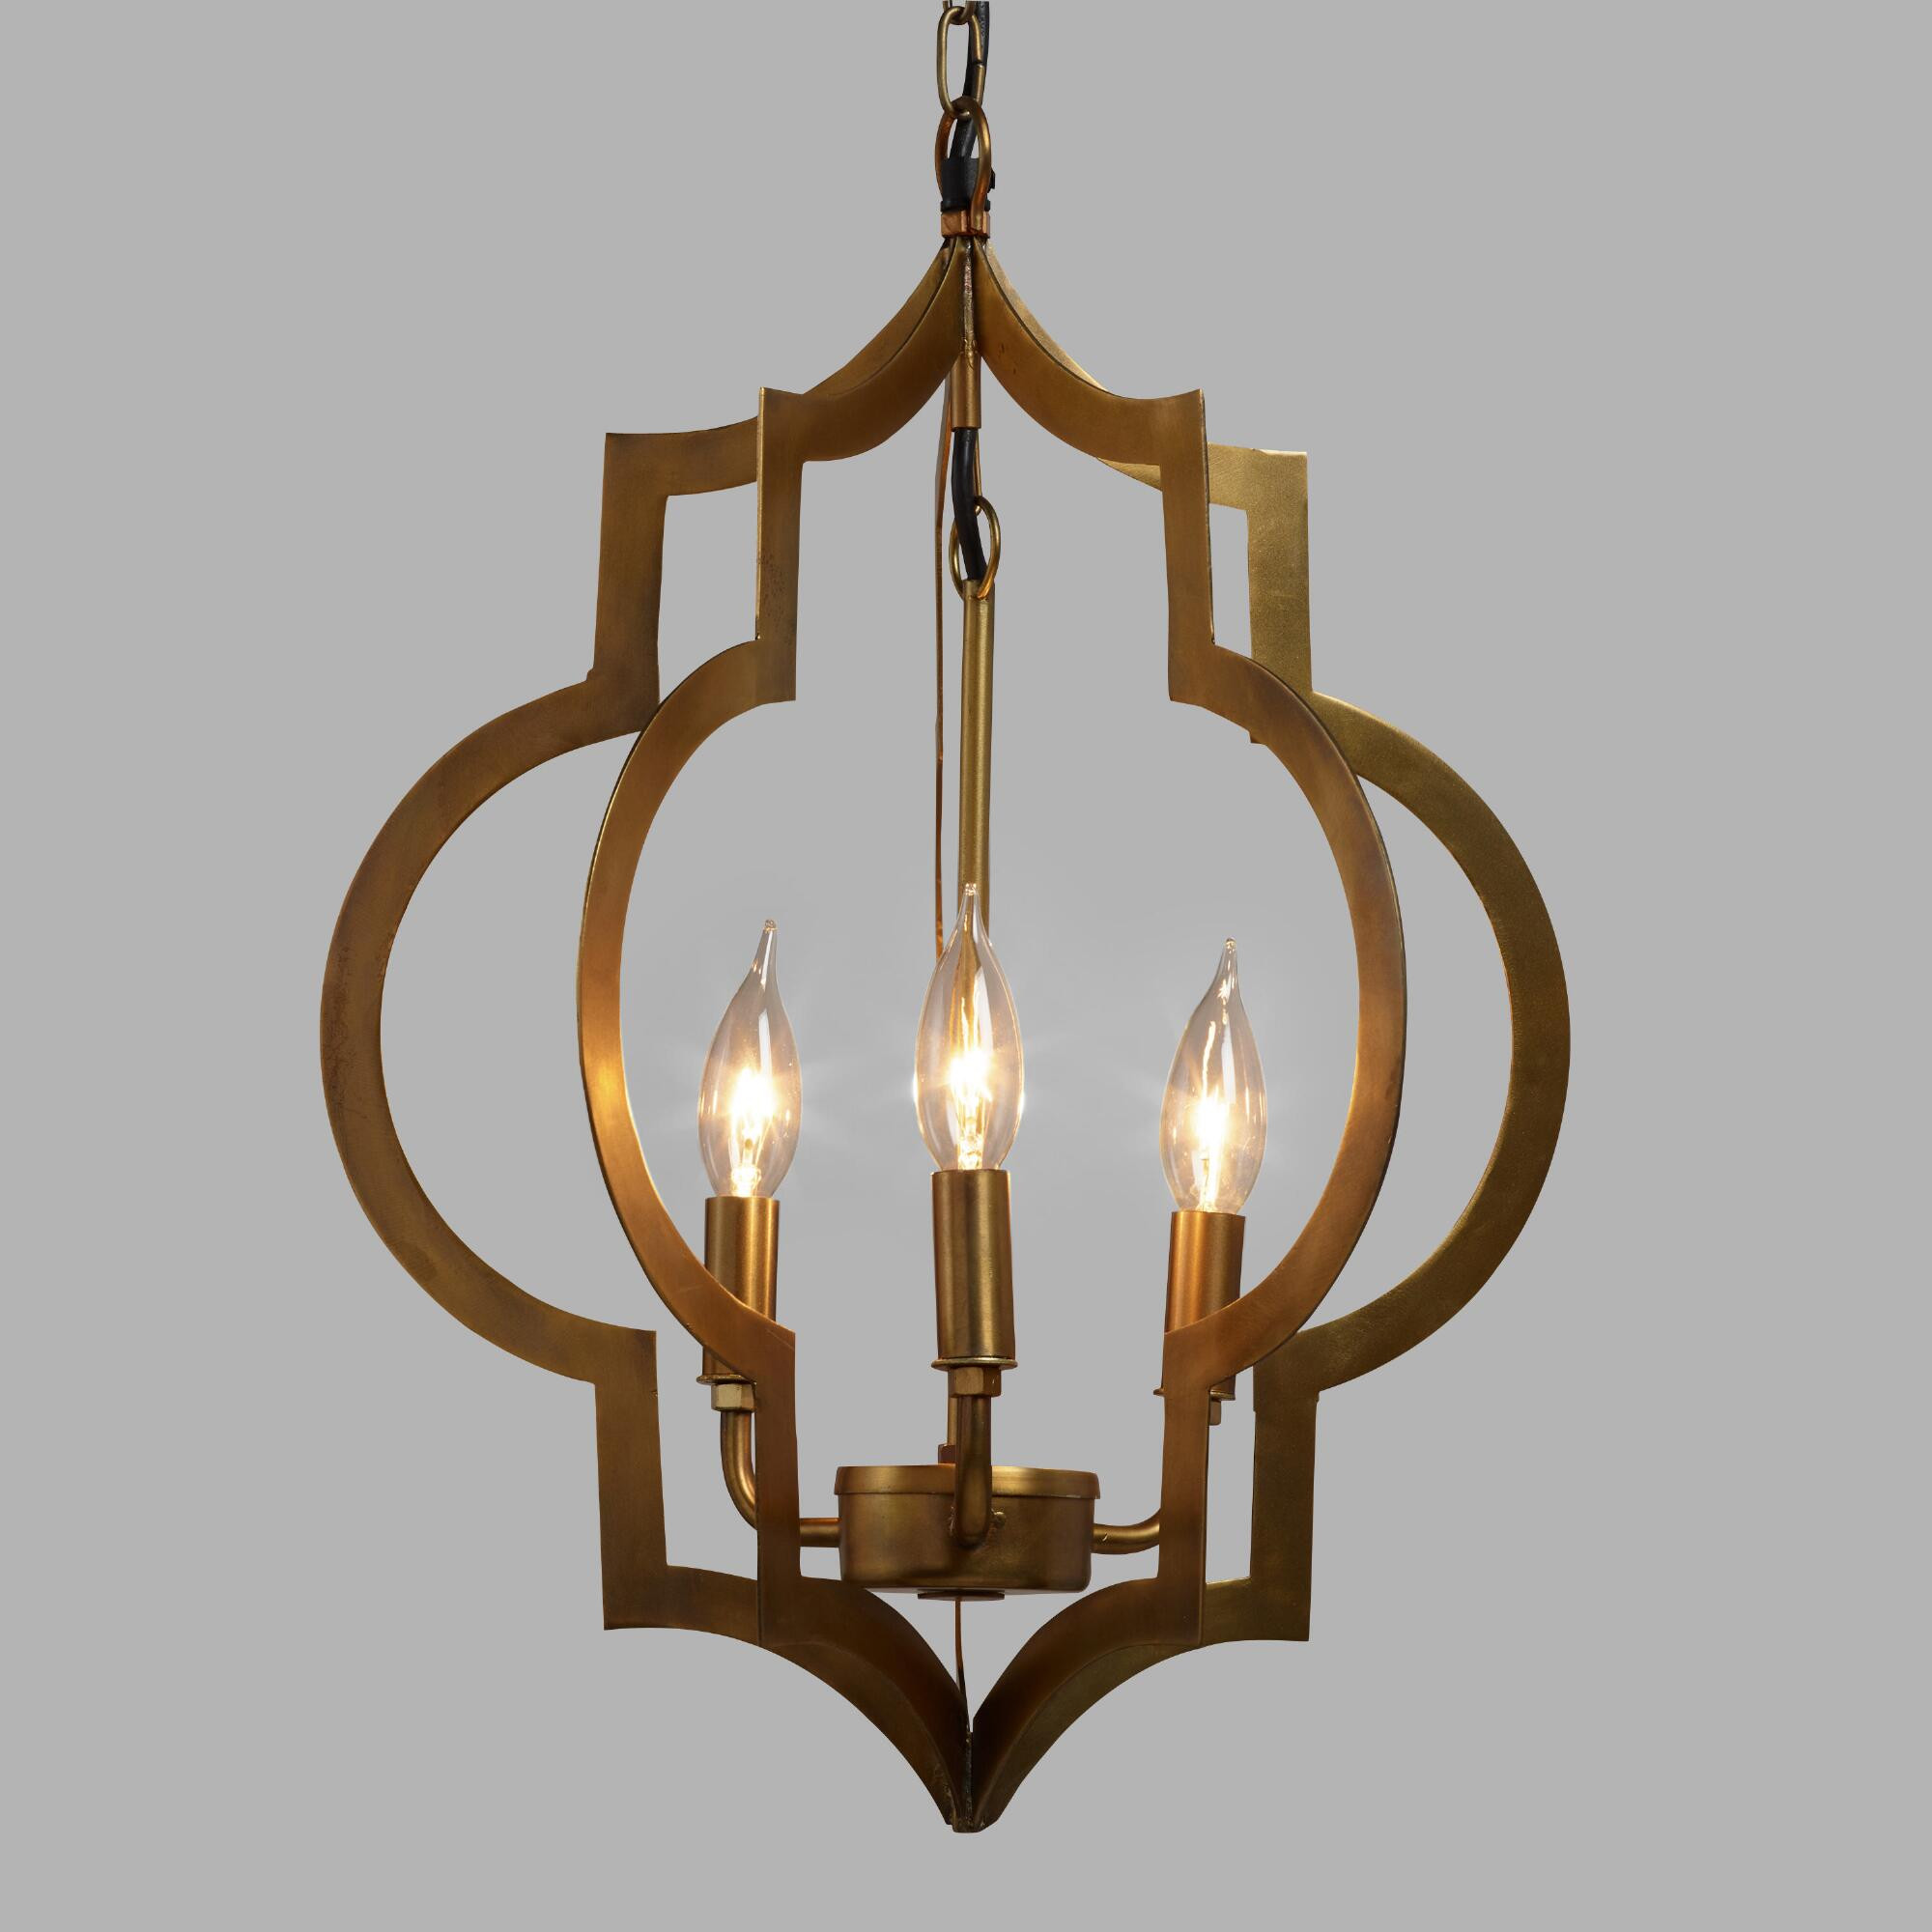 Best ideas about World Market Lighting
. Save or Pin Gold Quatrefoil 3 Light Pendant Lamp Now.